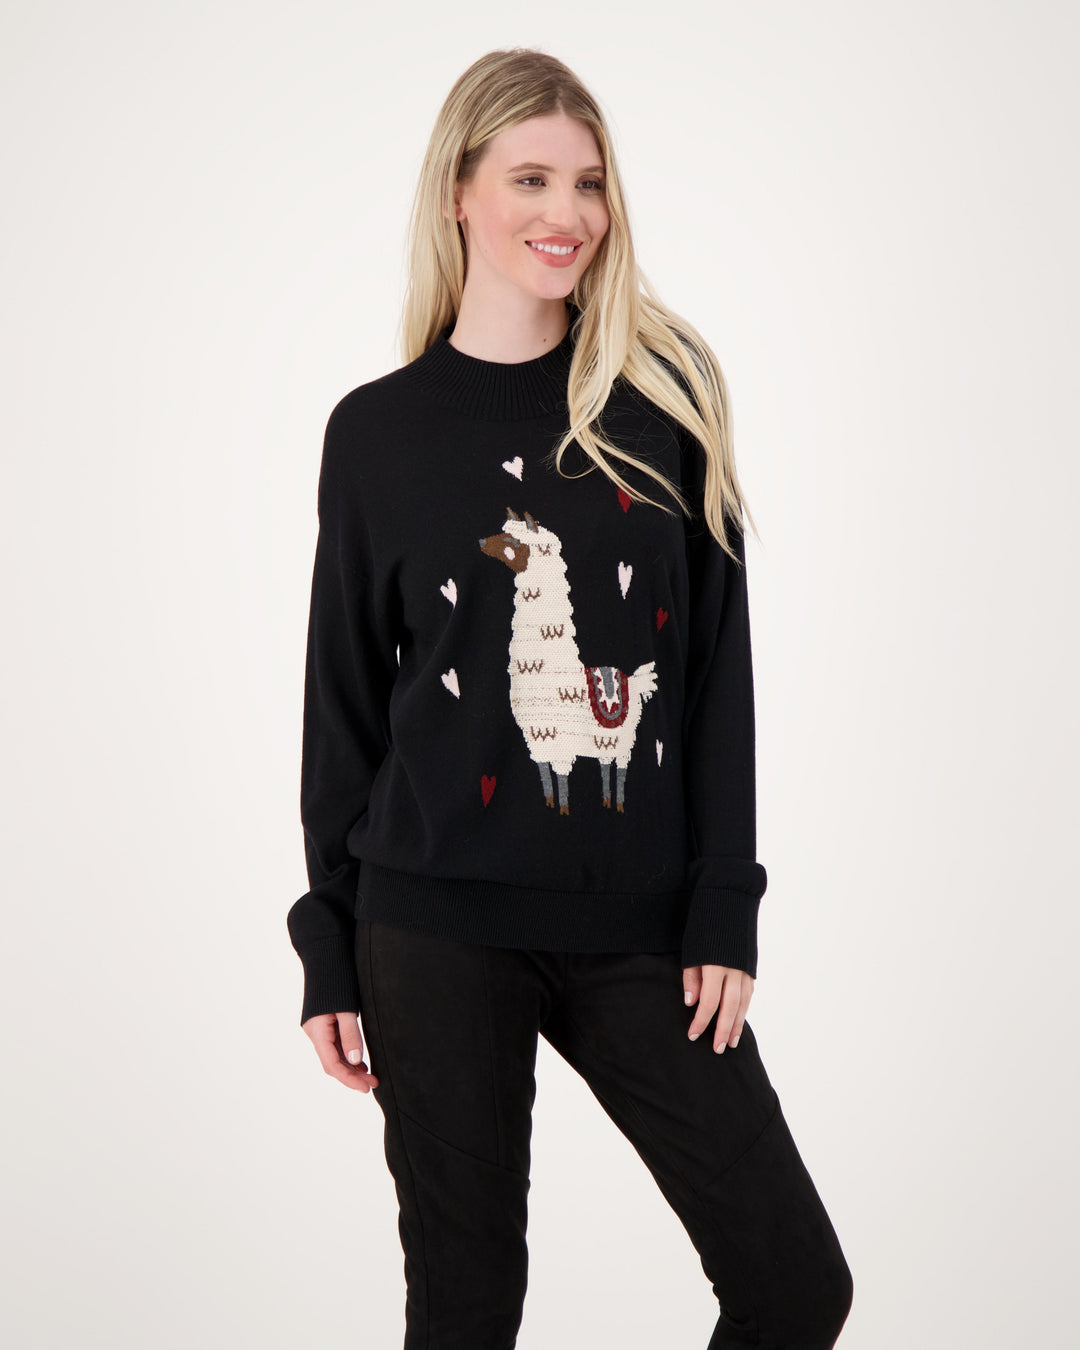 Llama Love Design Sweater